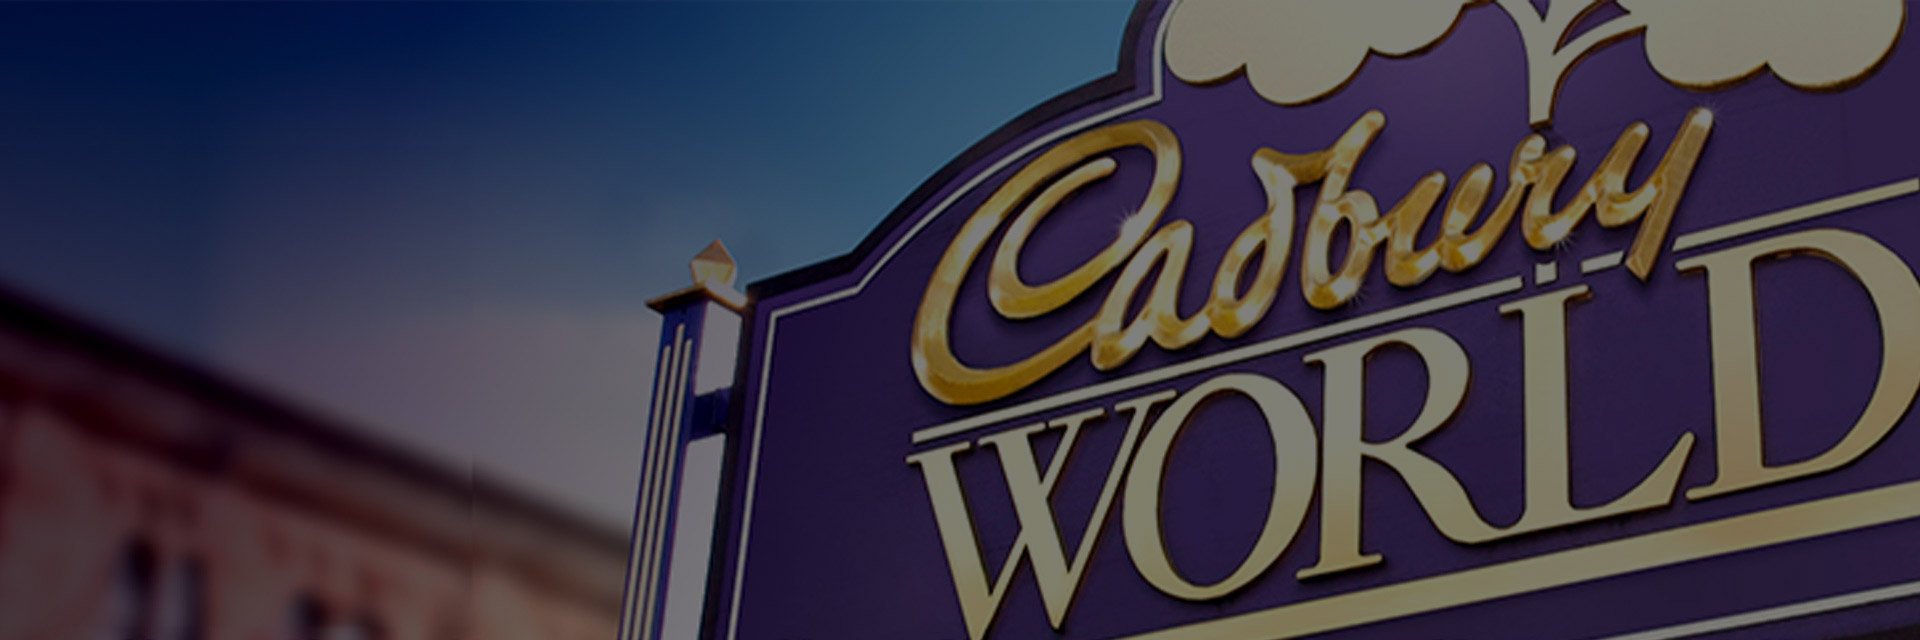 Cadbury World Teaser Banner MOB